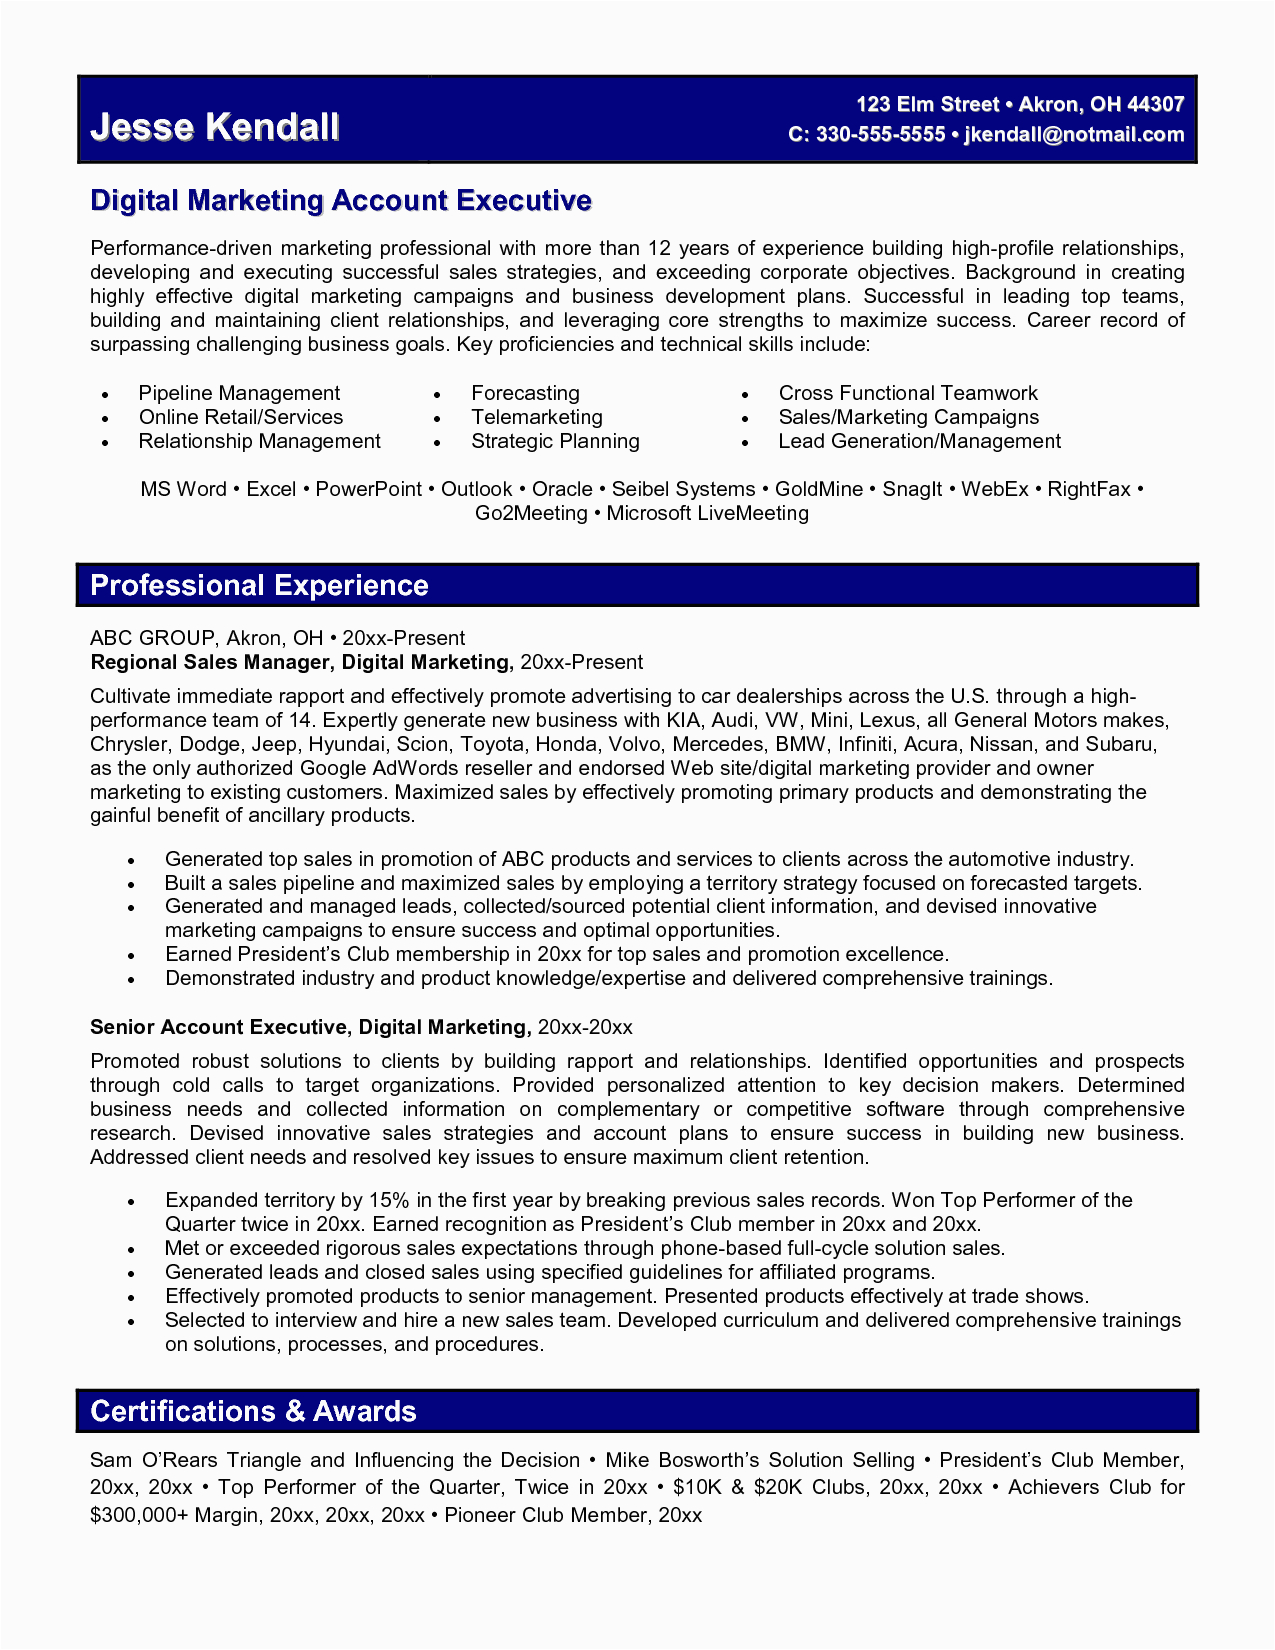 Digital Marketing Resume Sample for Experienced Digital Marketing Resume Fotolip Rich Image and